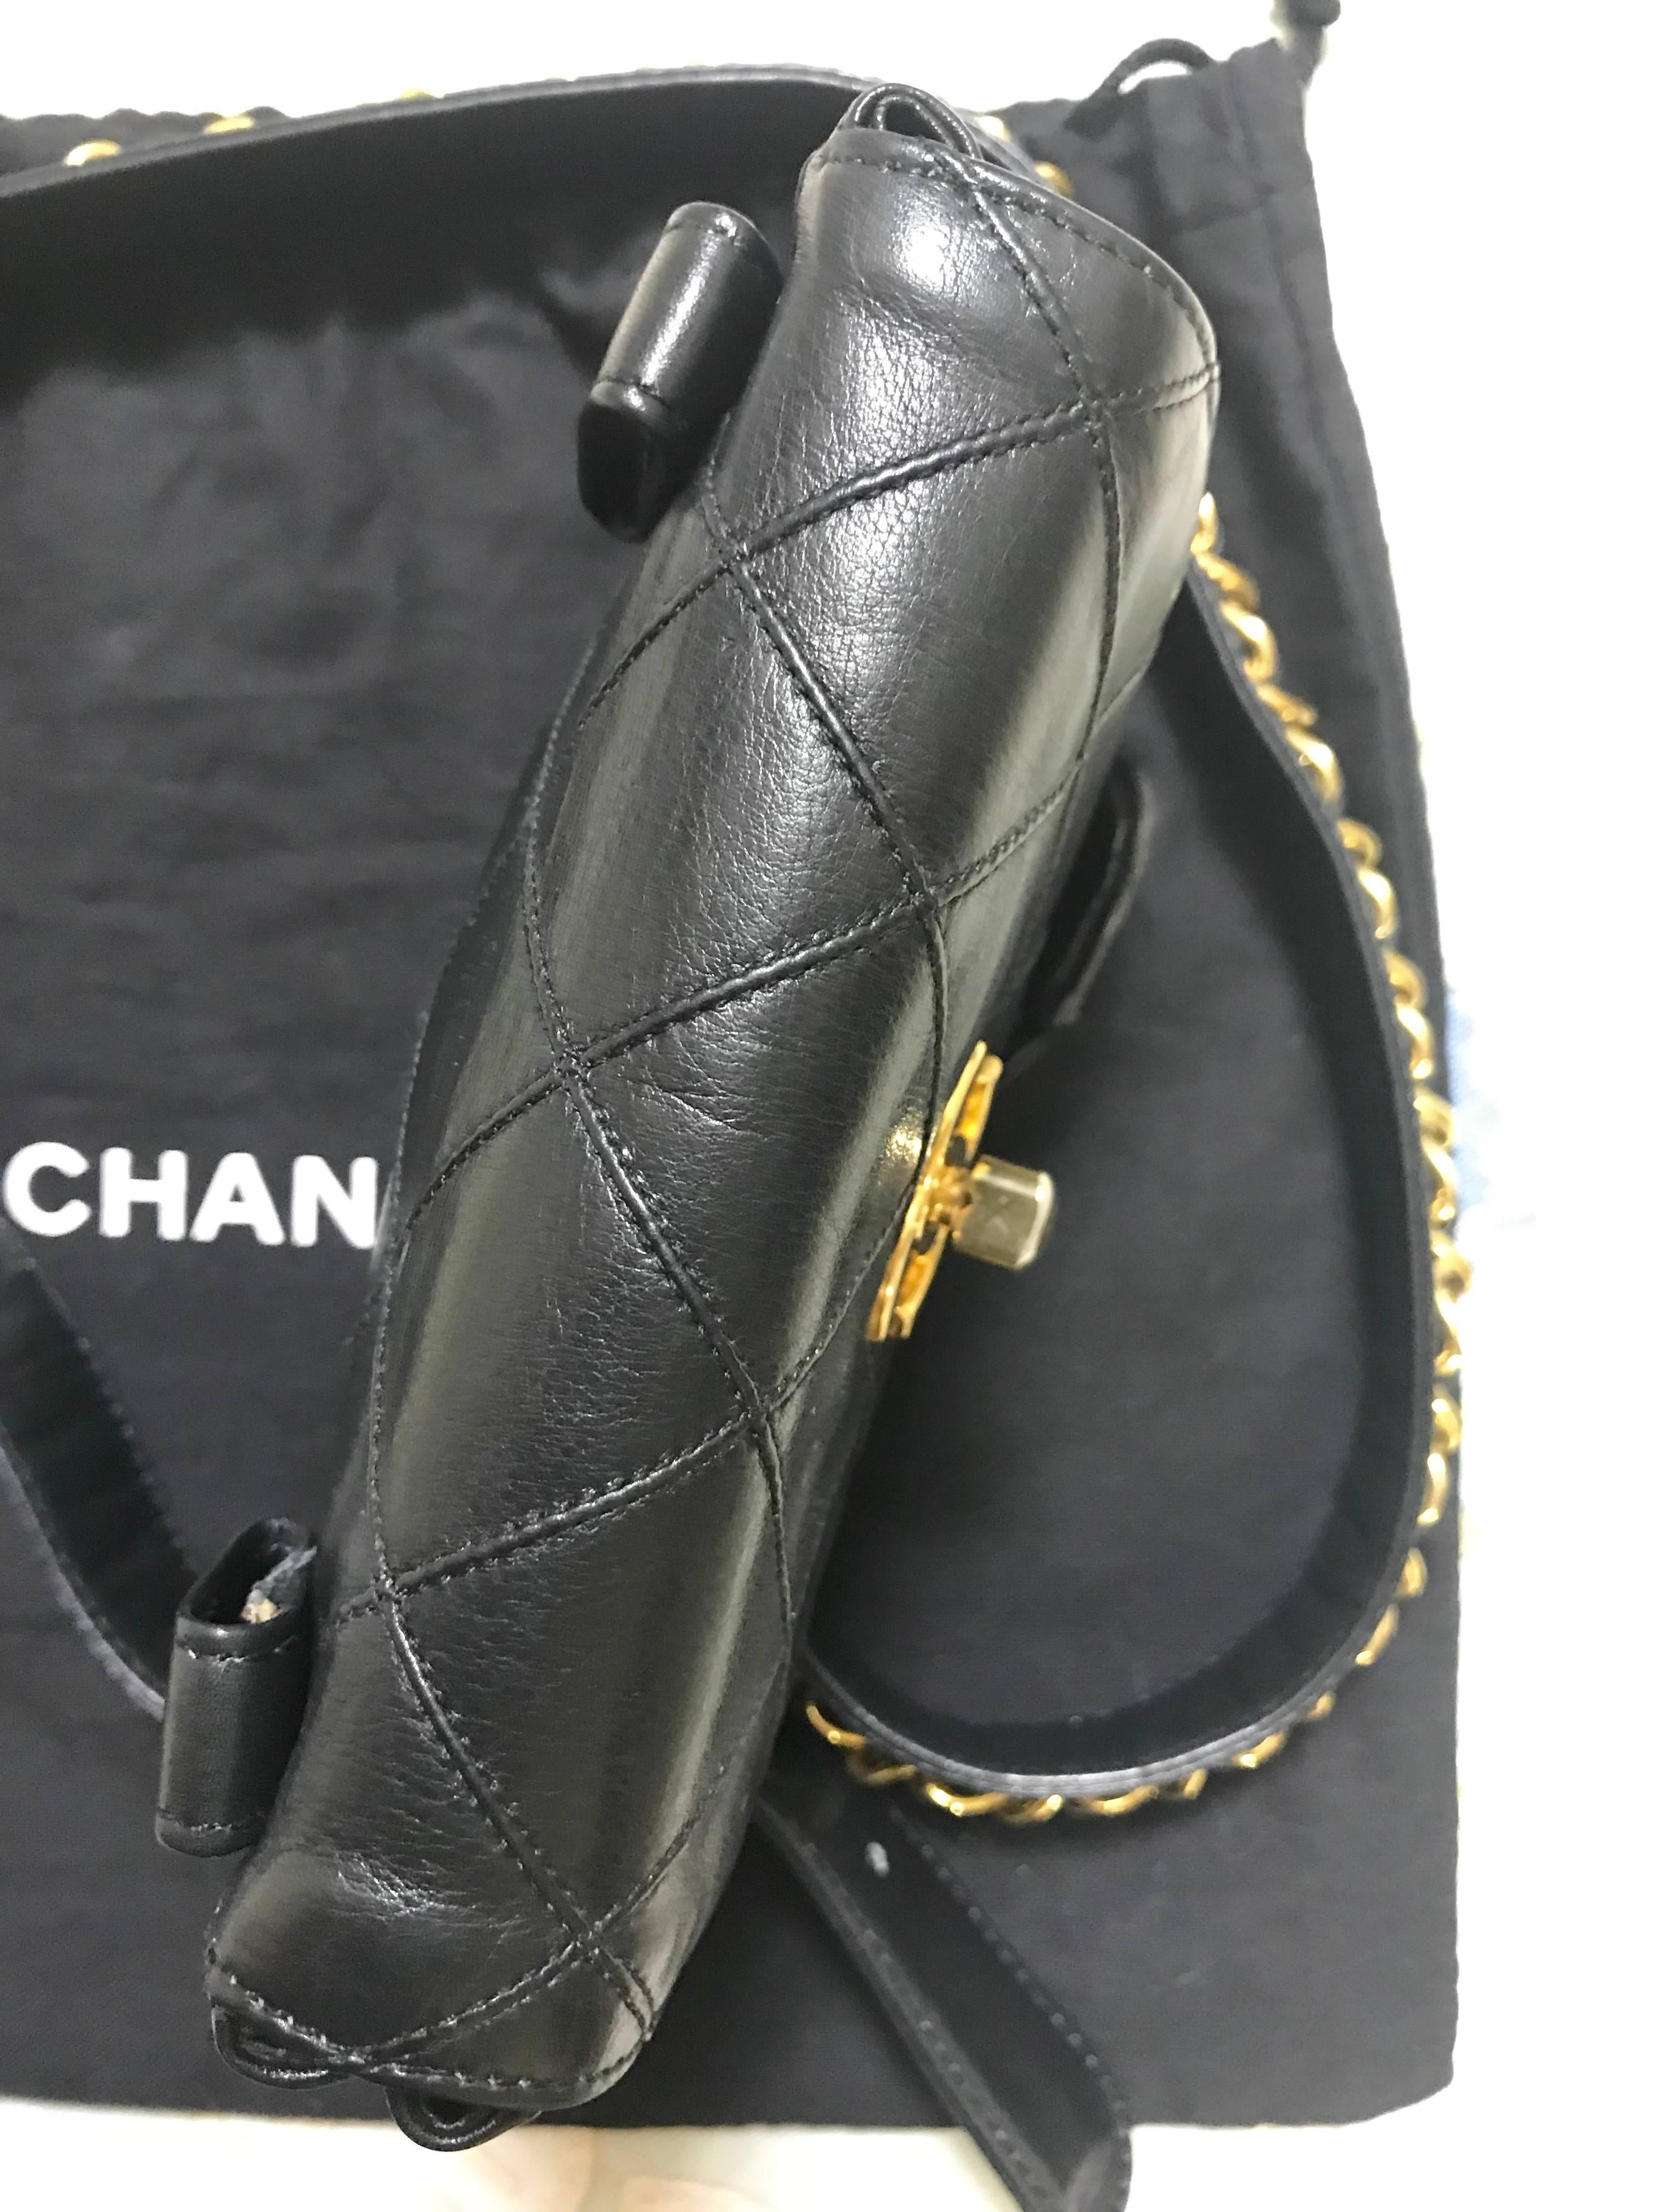 Vintage CHANEL black leather waist purse, fanny pack, hip bag with golden CC. 1